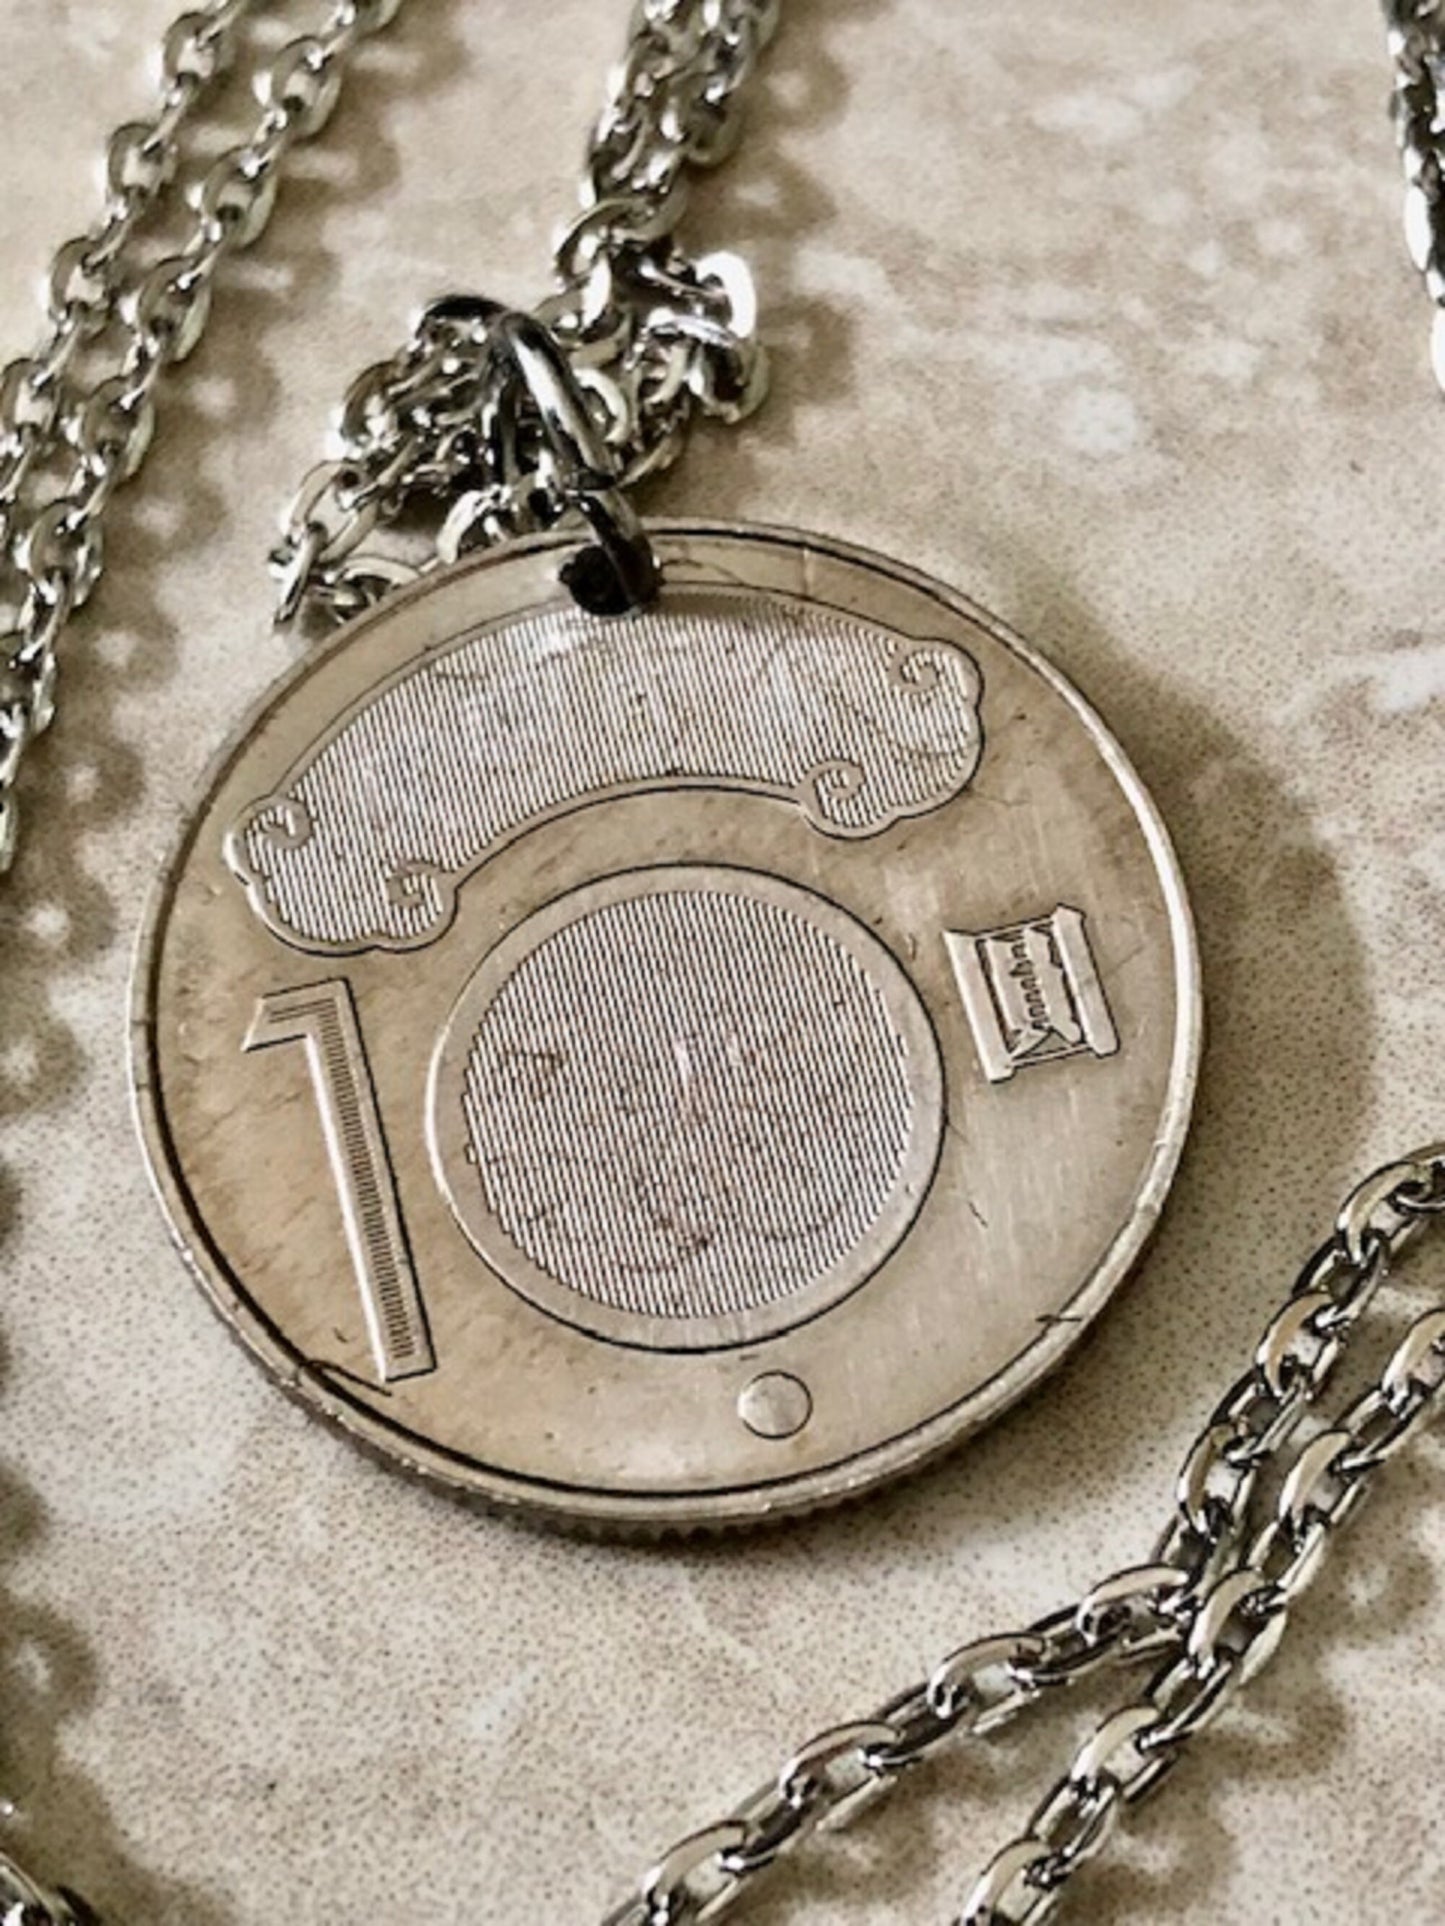 Japan Coin Necklace Hologram Pendant Japanese Vintage Rare Coins Enthusiast Fashion Accessory Handmade